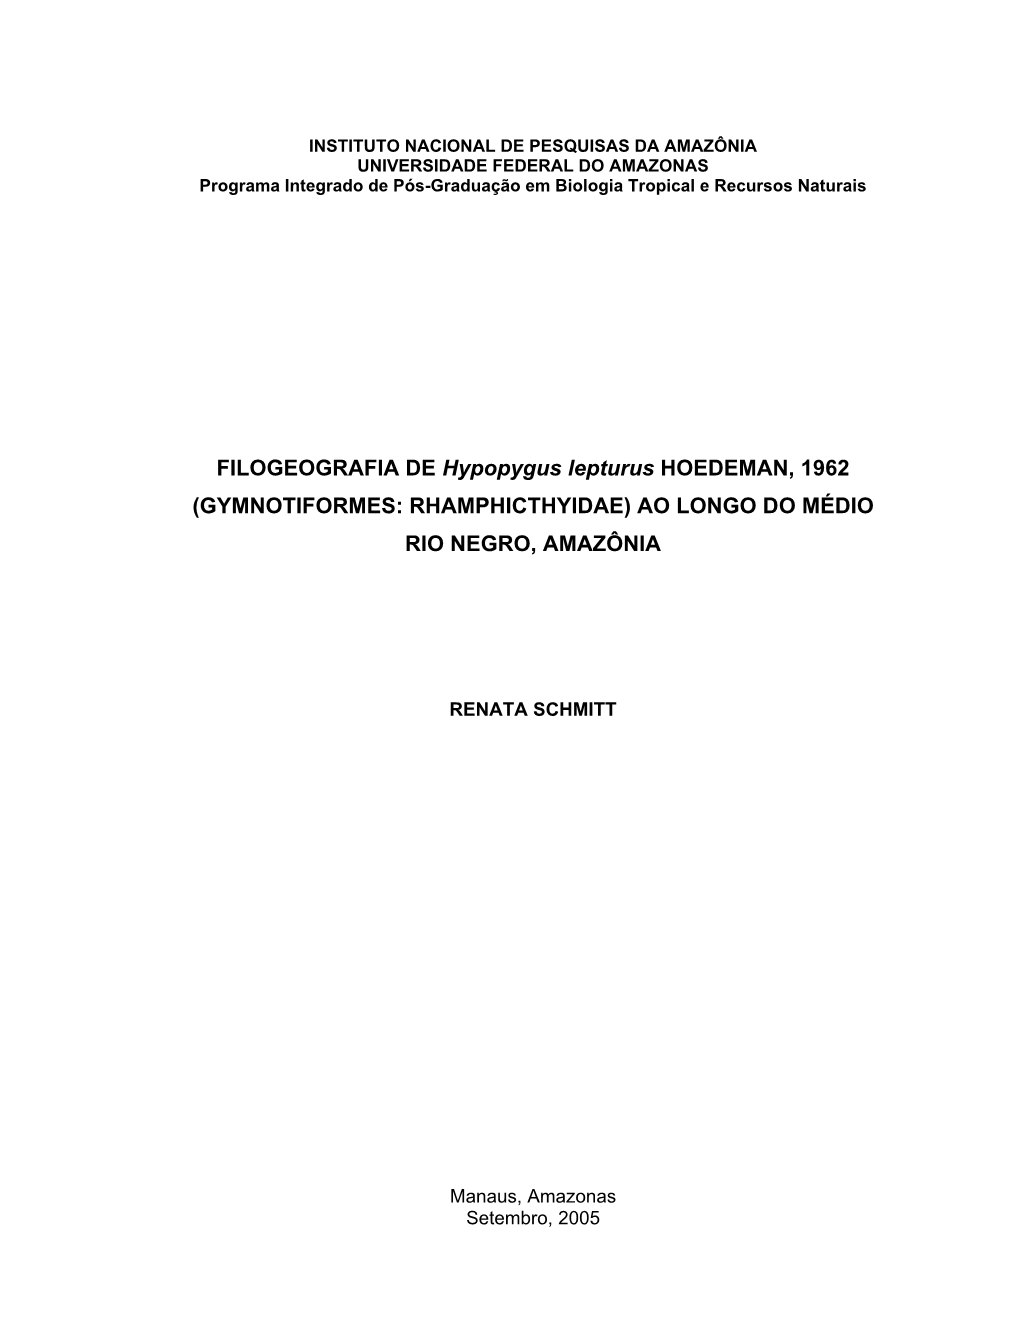 FILOGEOGRAFIA DE Hypopygus Lepturus HOEDEMAN, 1962 (GYMNOTIFORMES: RHAMPHICTHYIDAE) AO LONGO DO MÉDIO RIO NEGRO, AMAZÔNIA